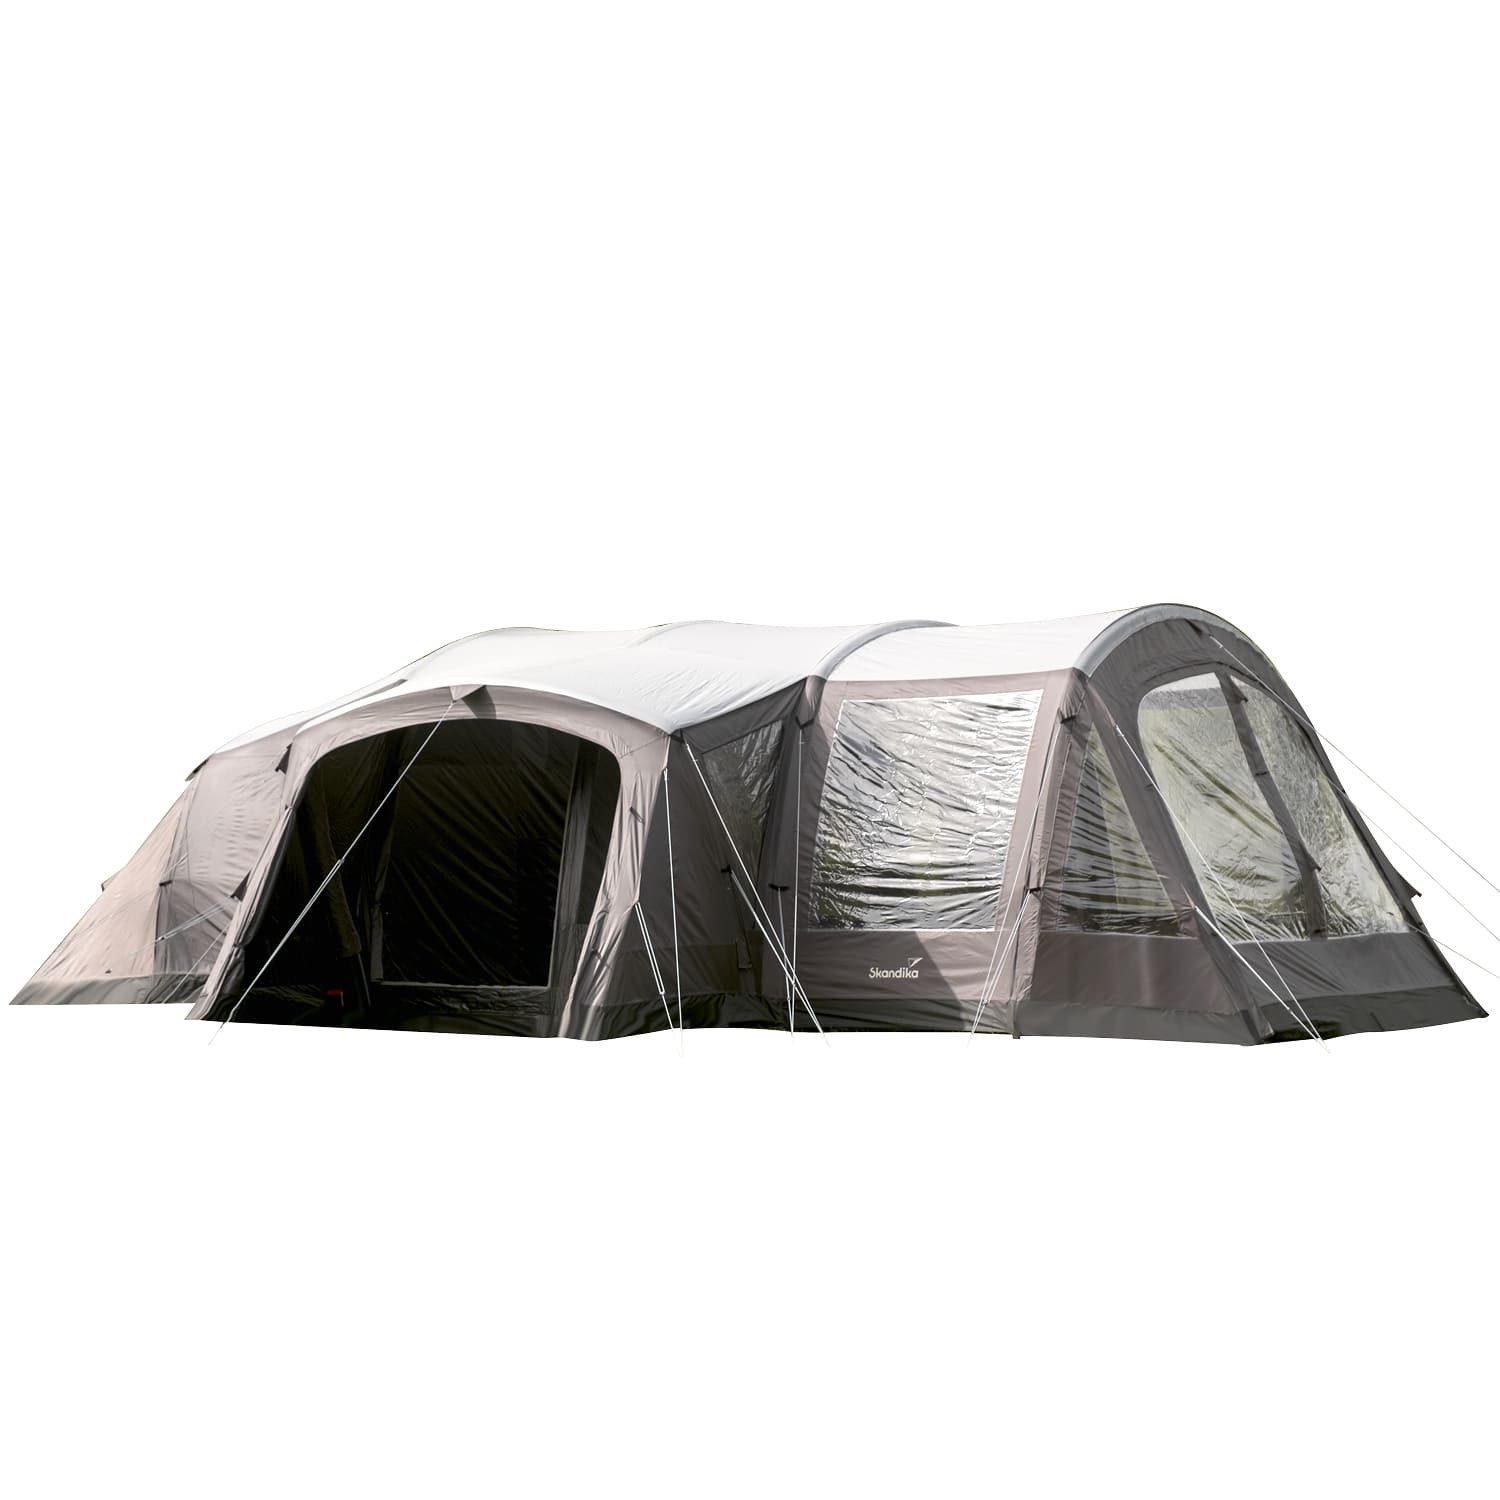 Skandika Tunnelzelt Timola 6 Air Sleeper Protect XL Plus, Personen: 6, 4000 mm Wassersäule, 220 cm Stehhöhe, Canopy, Air Tent